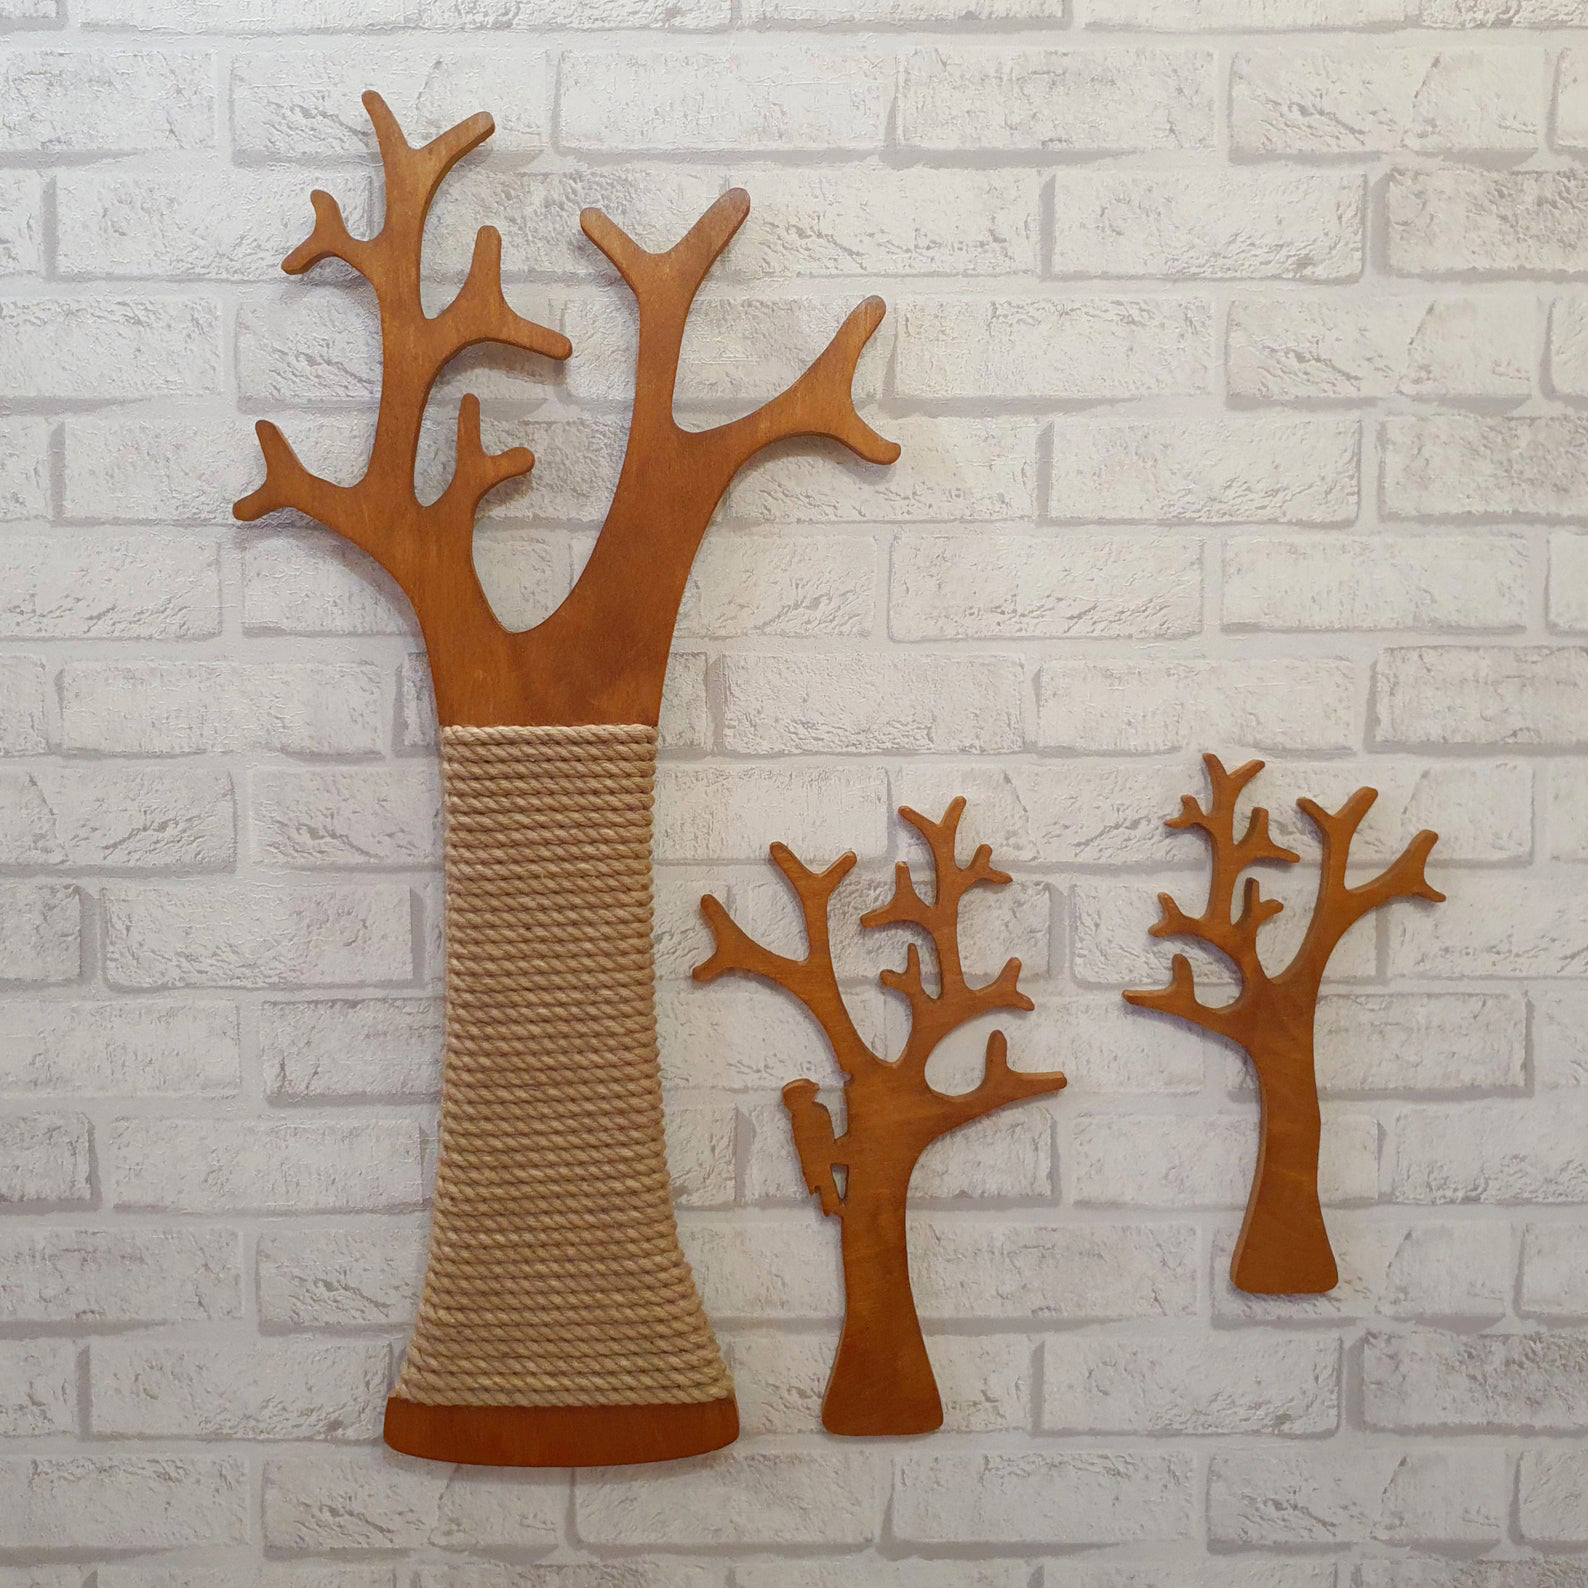 Wall-mounted wood cat scratcher shape of a tree